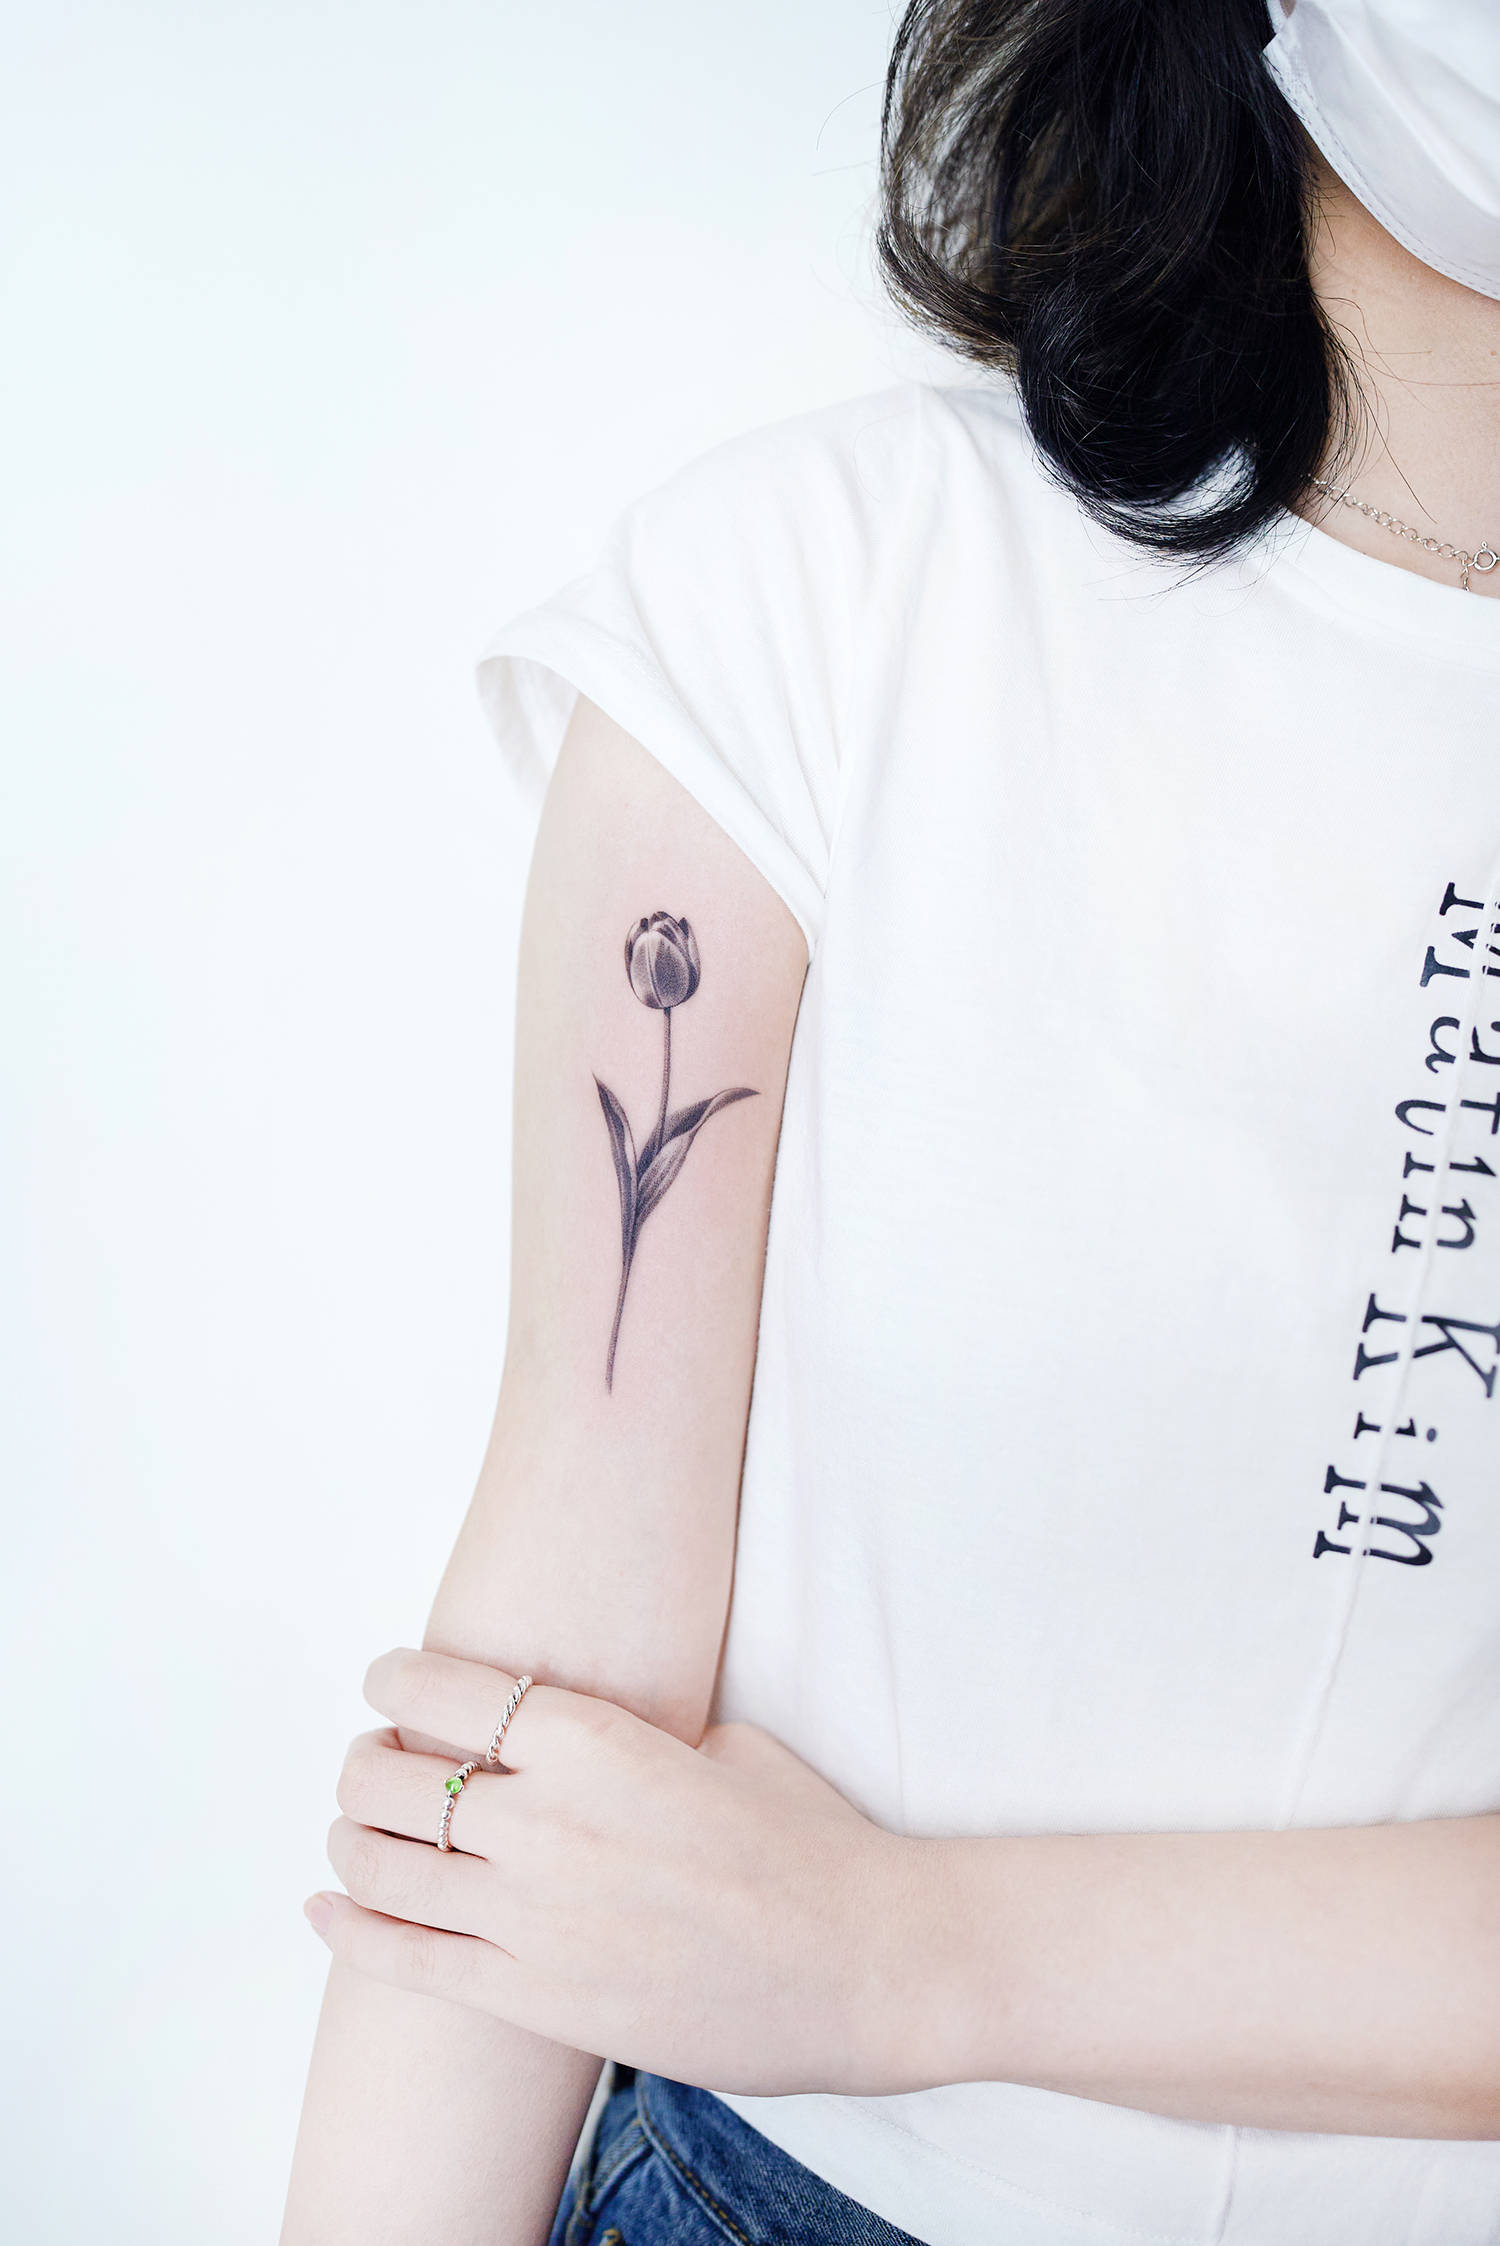 black and grey tulip tattoo on arm